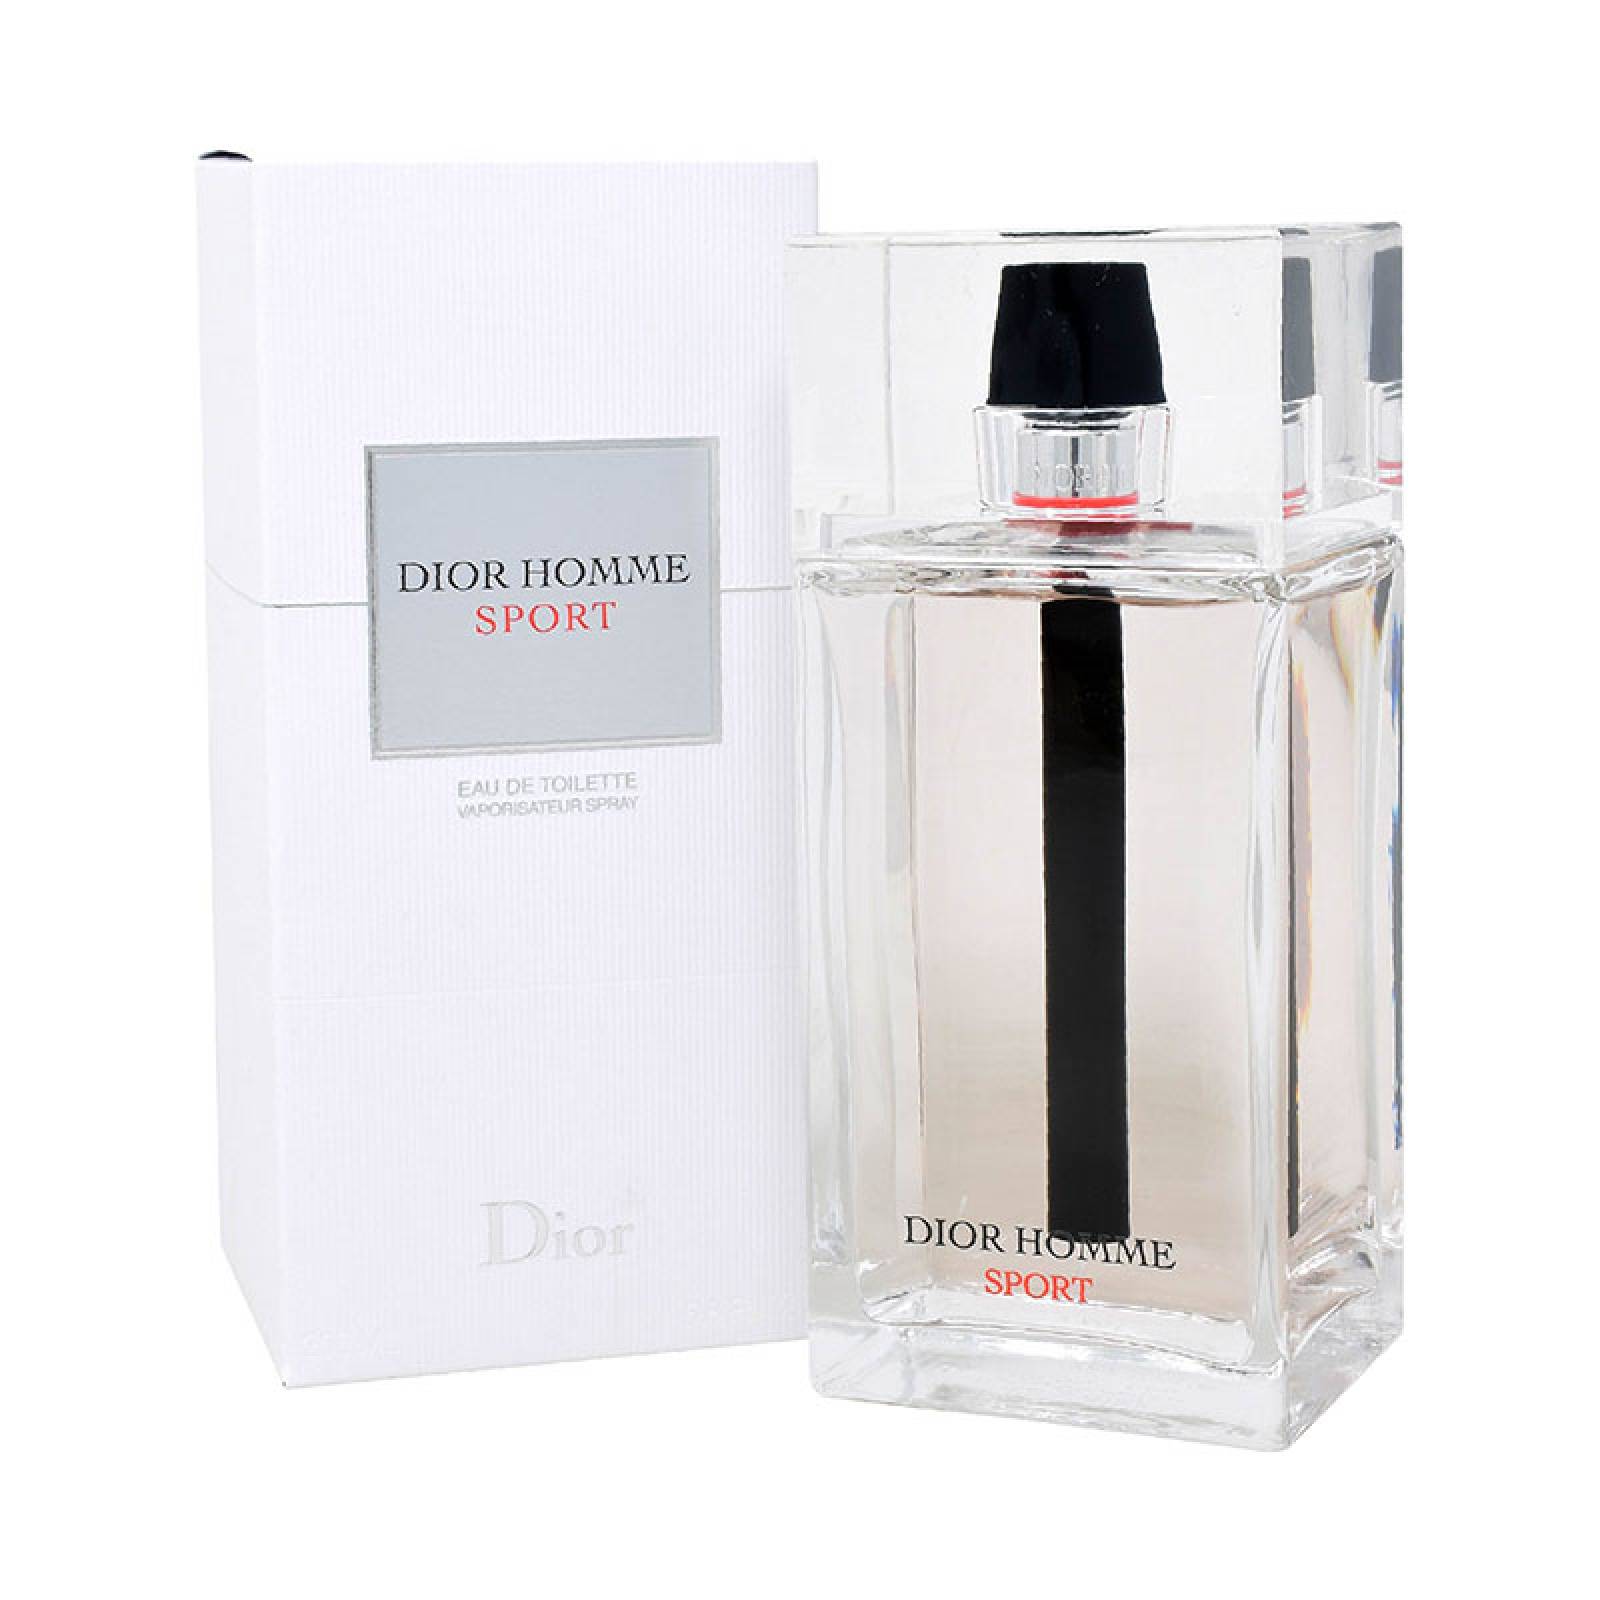 Dior Homme Sport 200 ml Edt Spray de Christian Dior